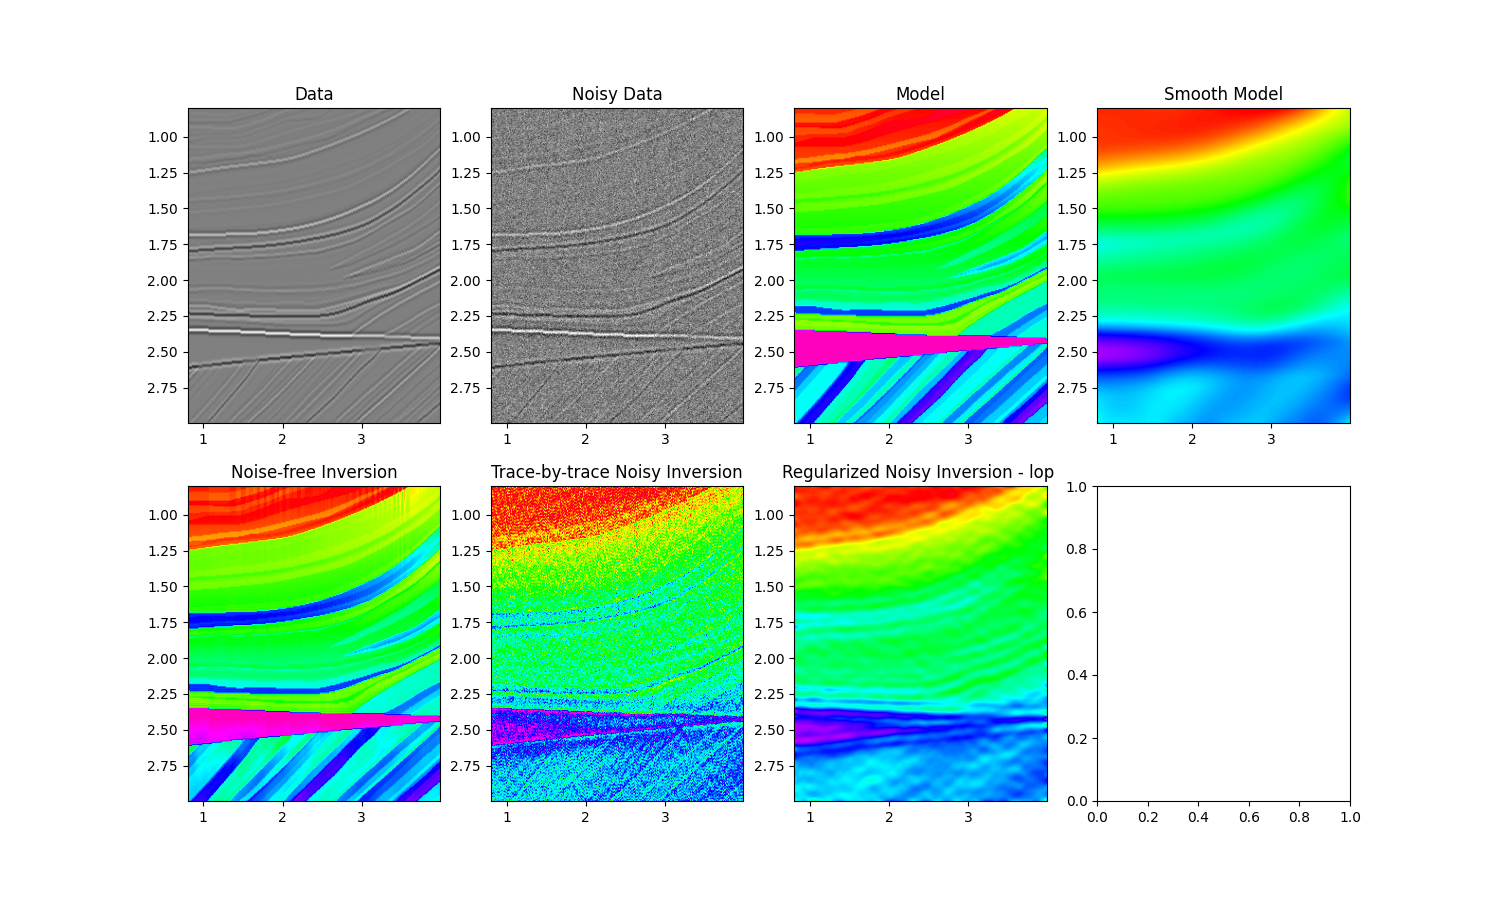 Data, Noisy Data, Model, Smooth Model, Noise-free Inversion, Trace-by-trace Noisy Inversion, Regularized Noisy Inversion - lop